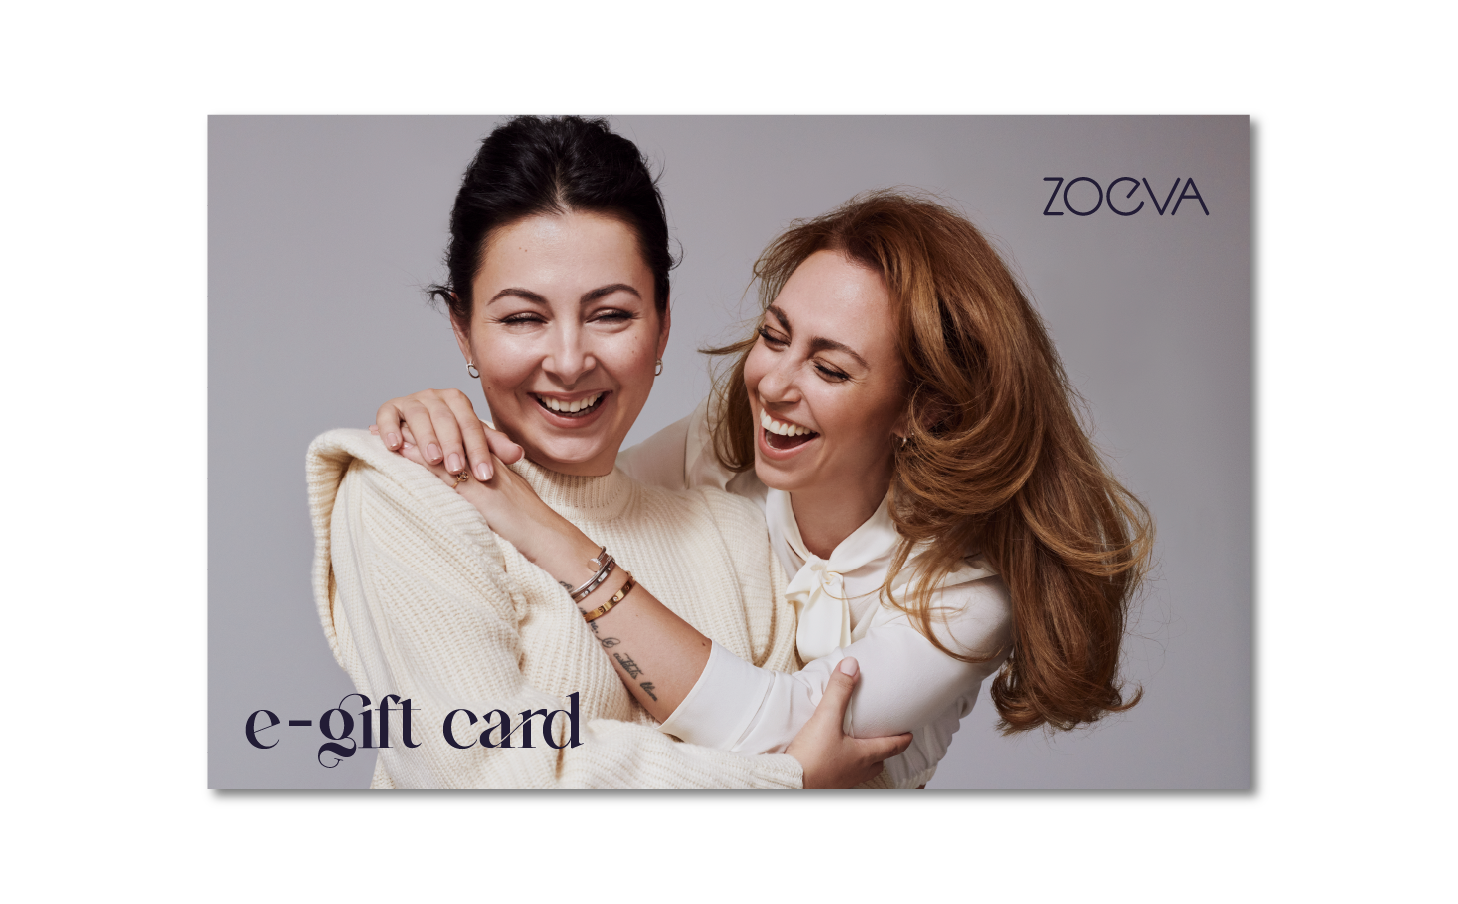 E-Gift Card Main Image featured